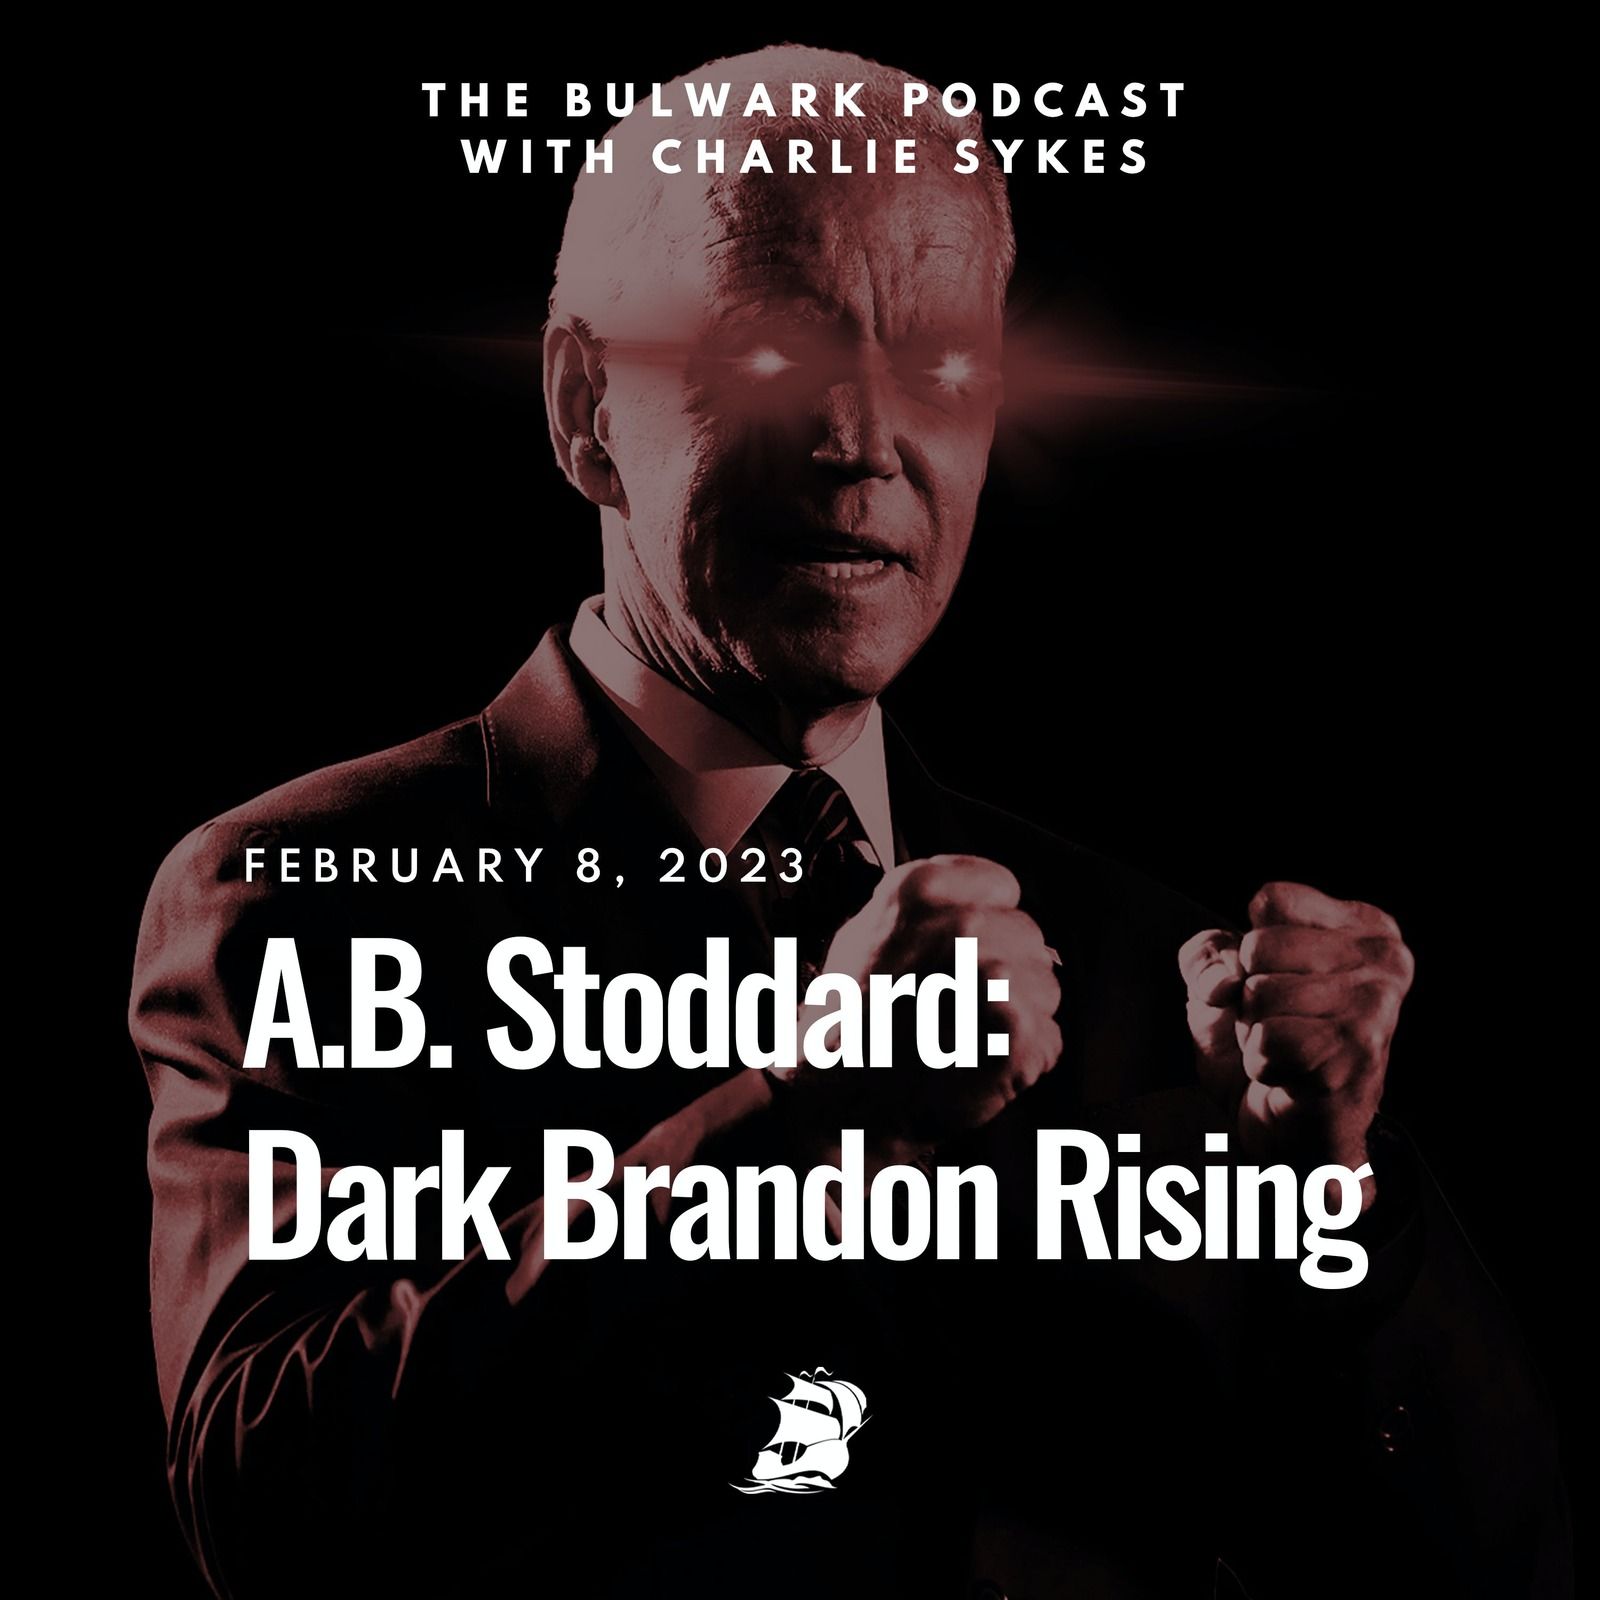 A.B. Stoddard: Dark Brandon Rising by The Bulwark Podcast